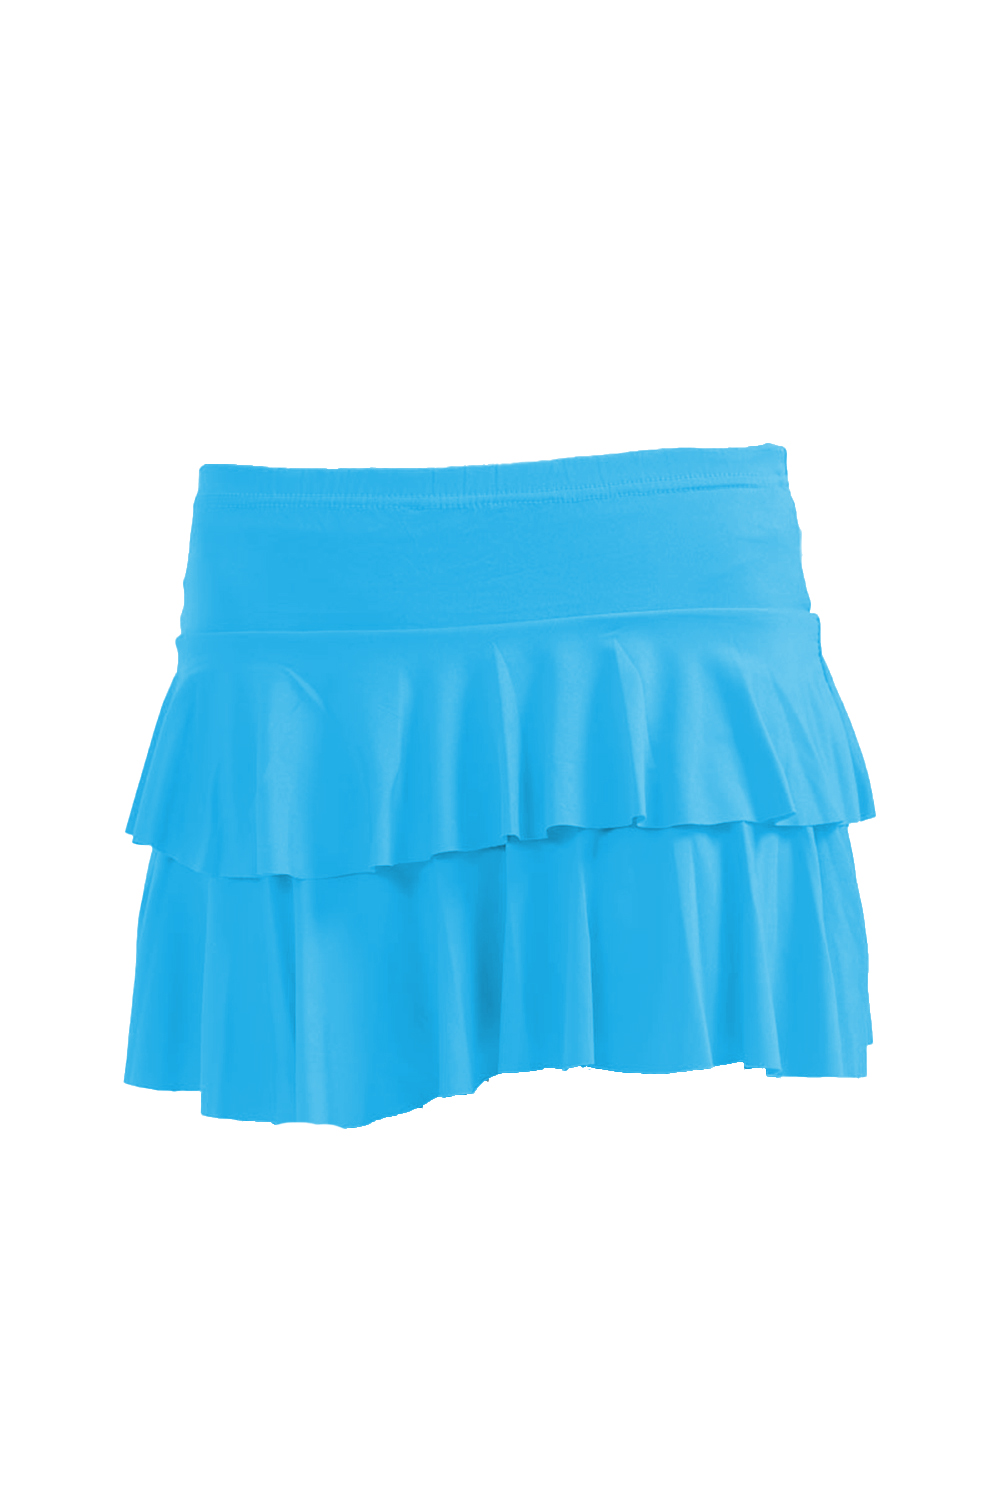 Crazy Chick Adult Turquoise RARA Skirt